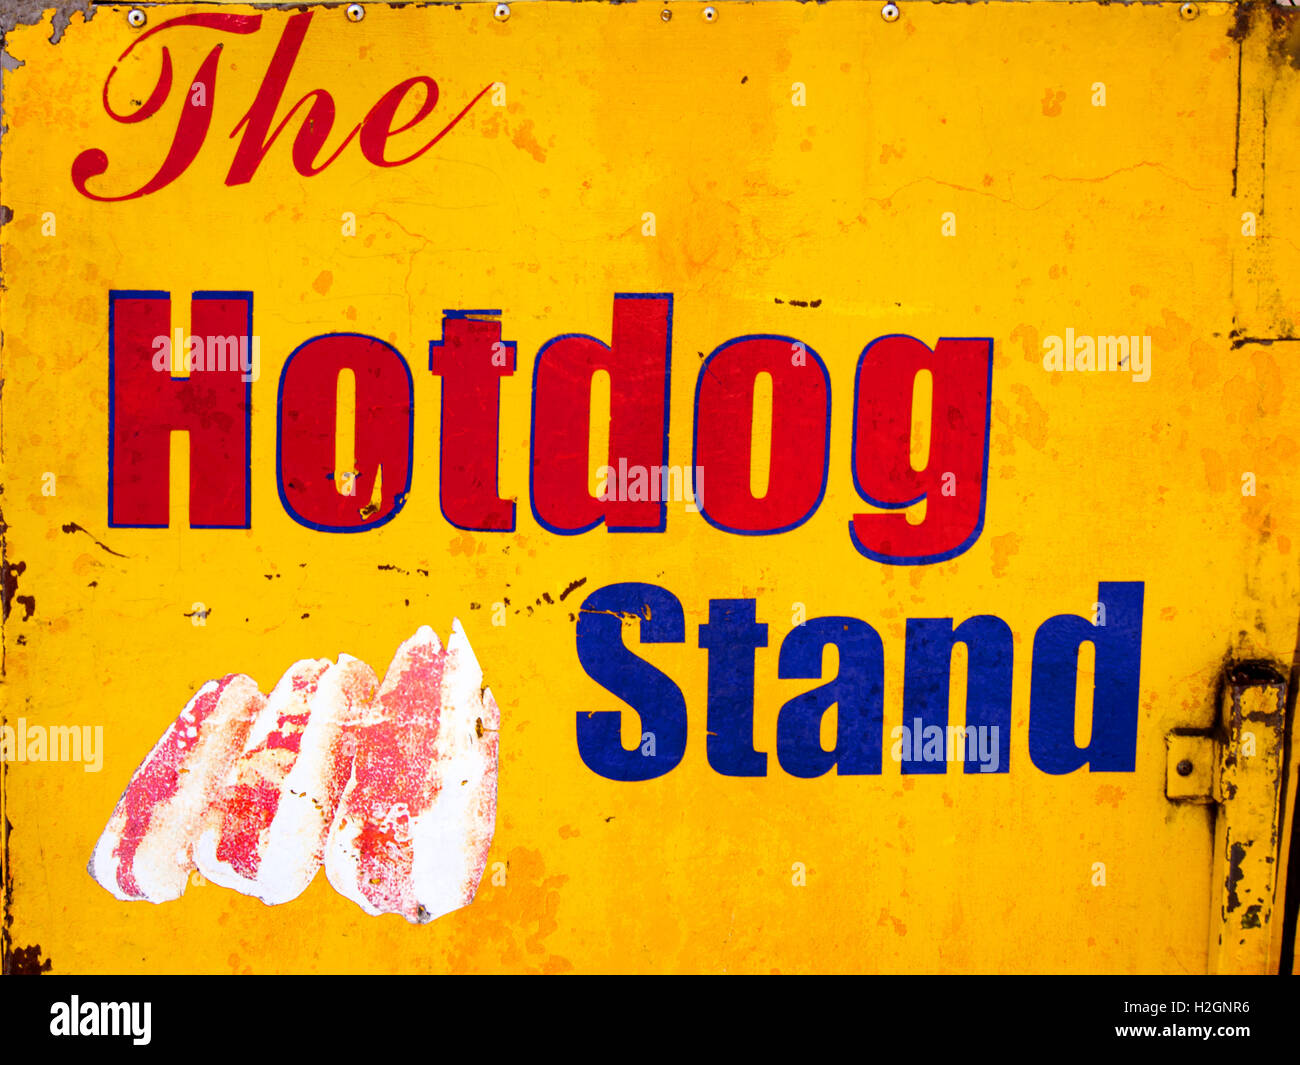 hotdog stand sign Stock Photo